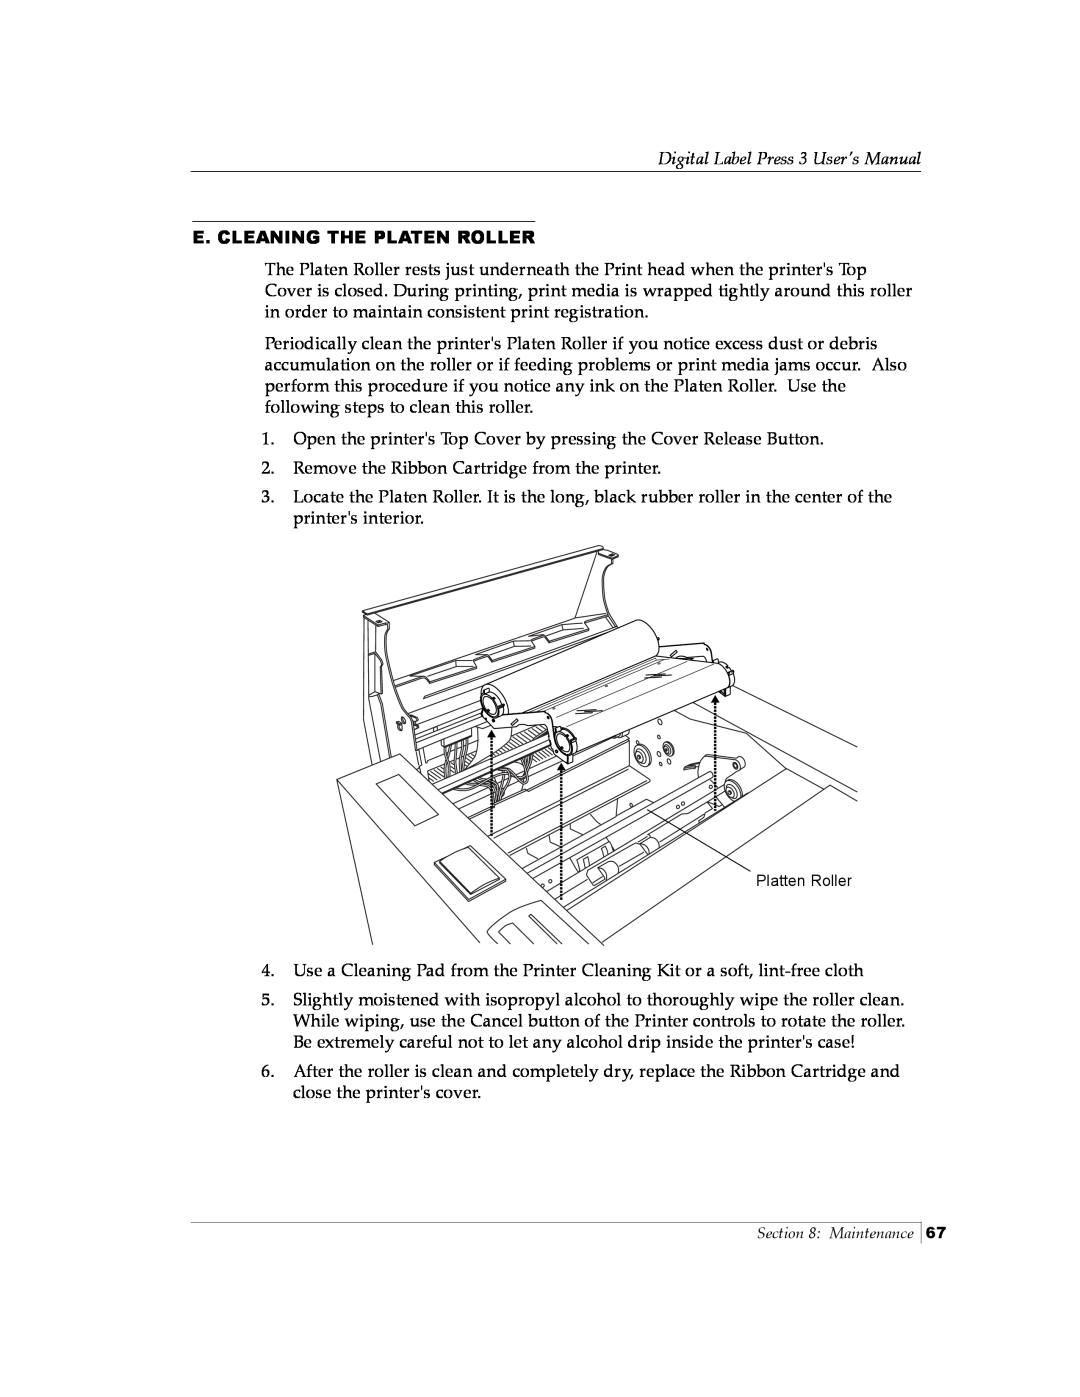 Primera Technology 510212 manual E. Cleaning The Platen Roller, Digital Label Press 3 User’s Manual, Platten Roller 